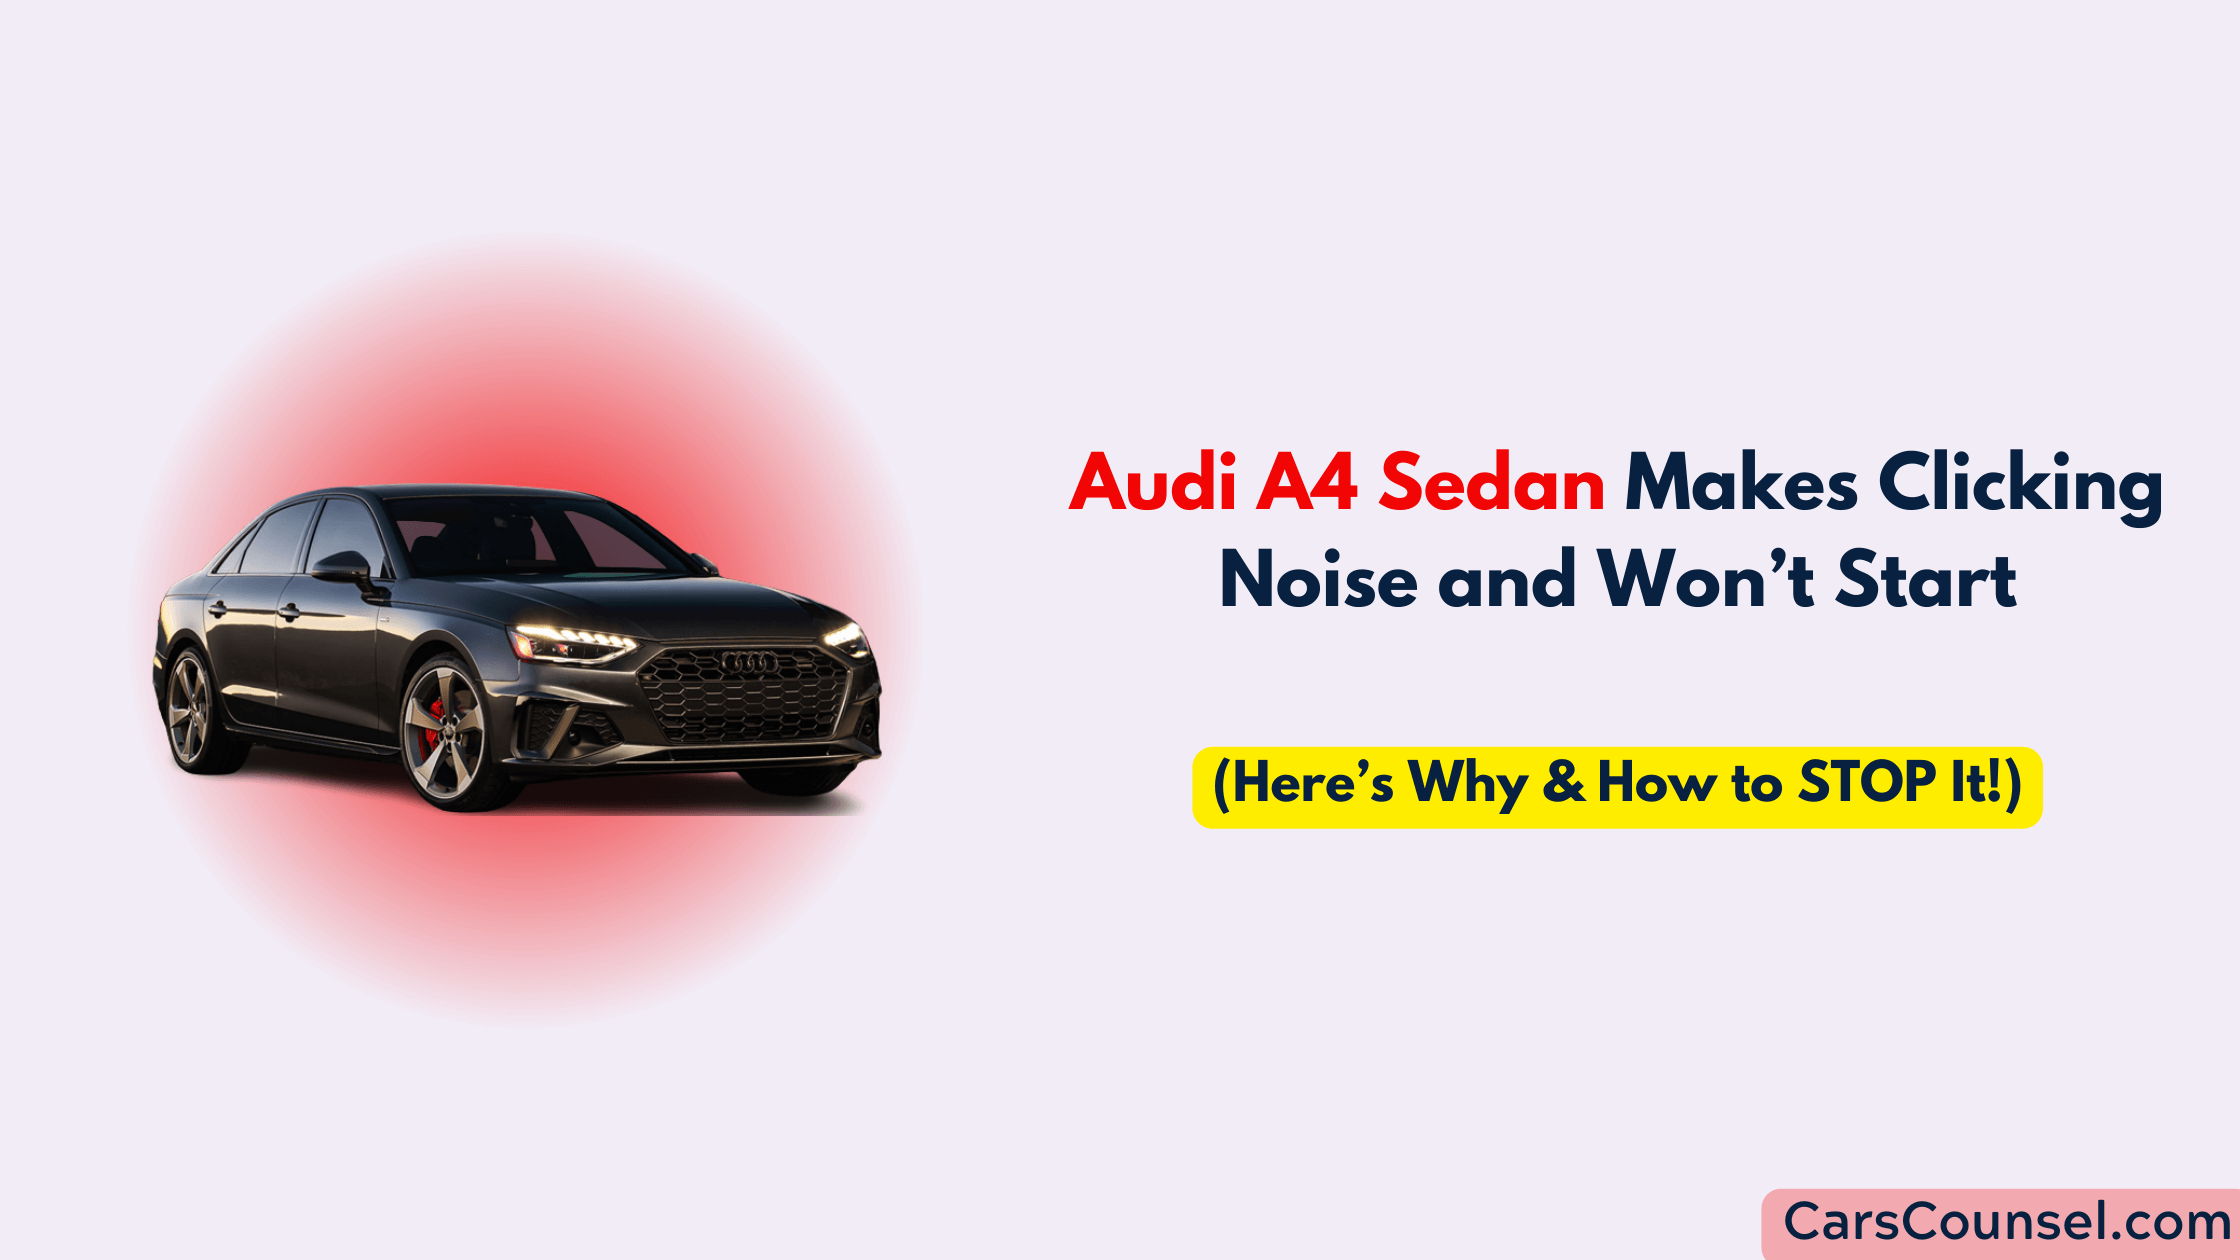 Audi A4 Sedan Clicking Noise And Won’t Start